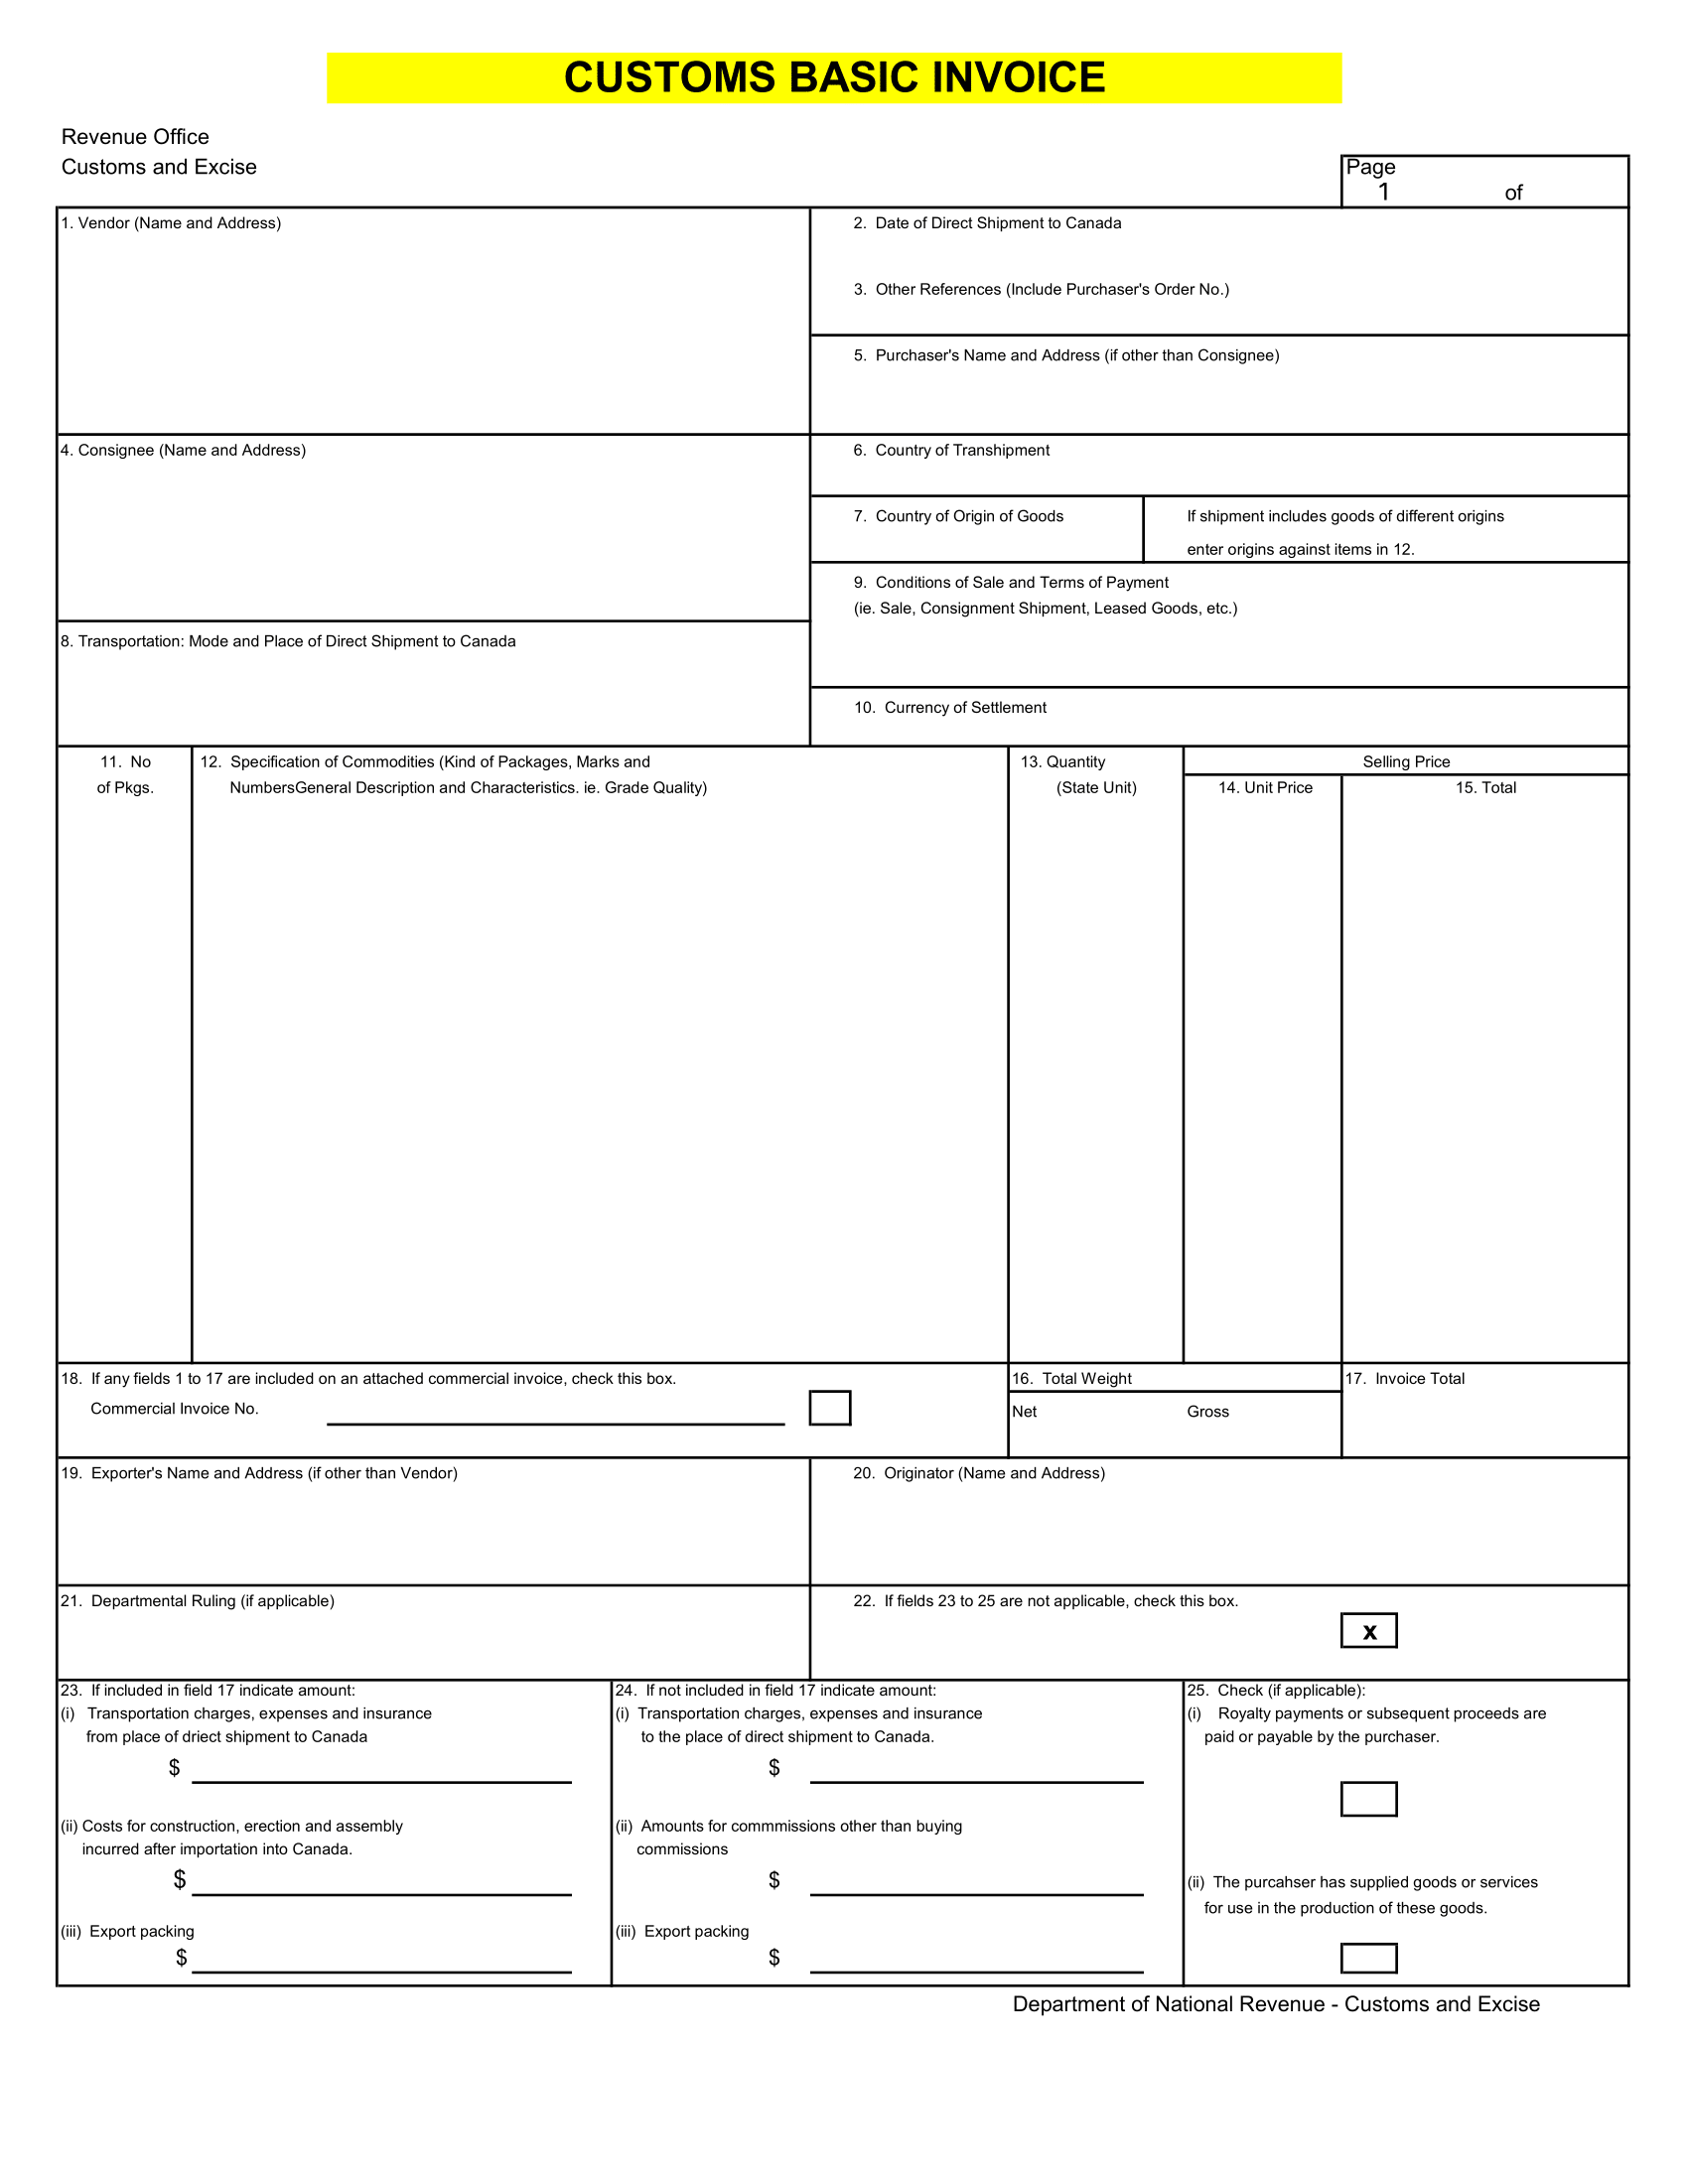 Customs Basic Invoice Format in Excel